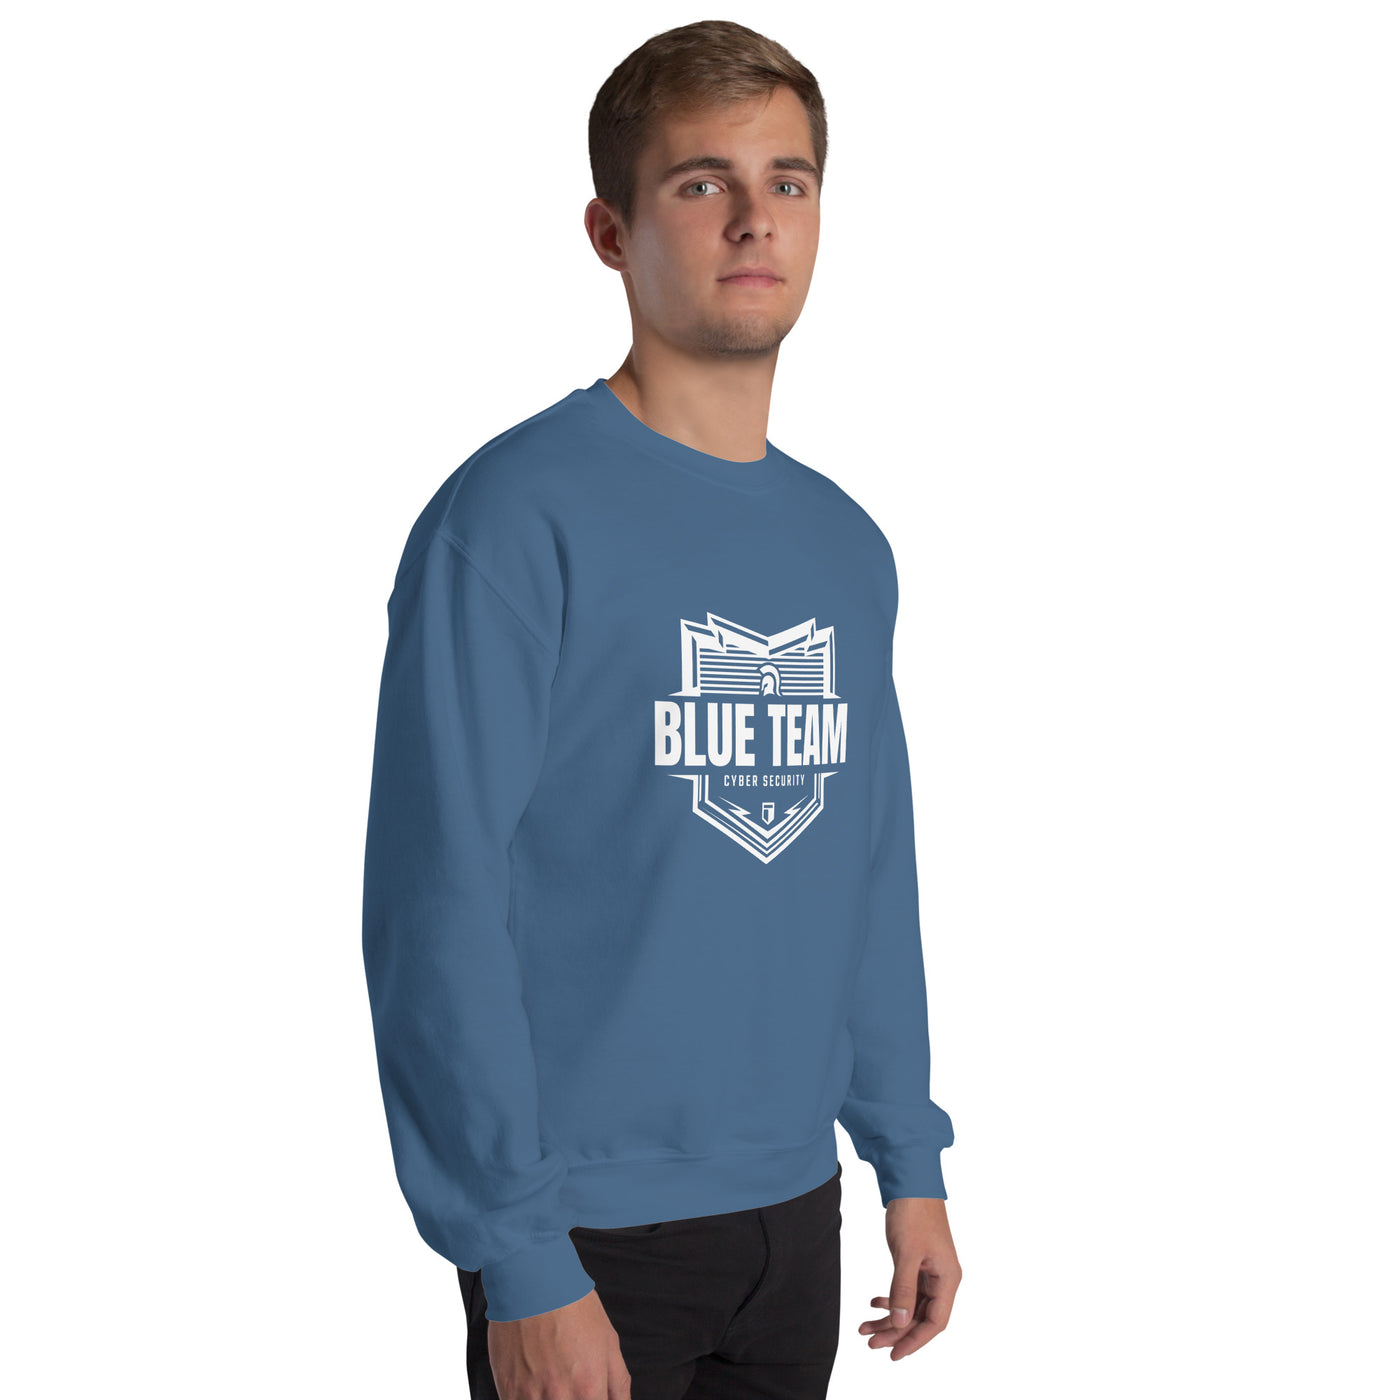 Cyber Security Blue Team V1 - Unisex Sweatshirt